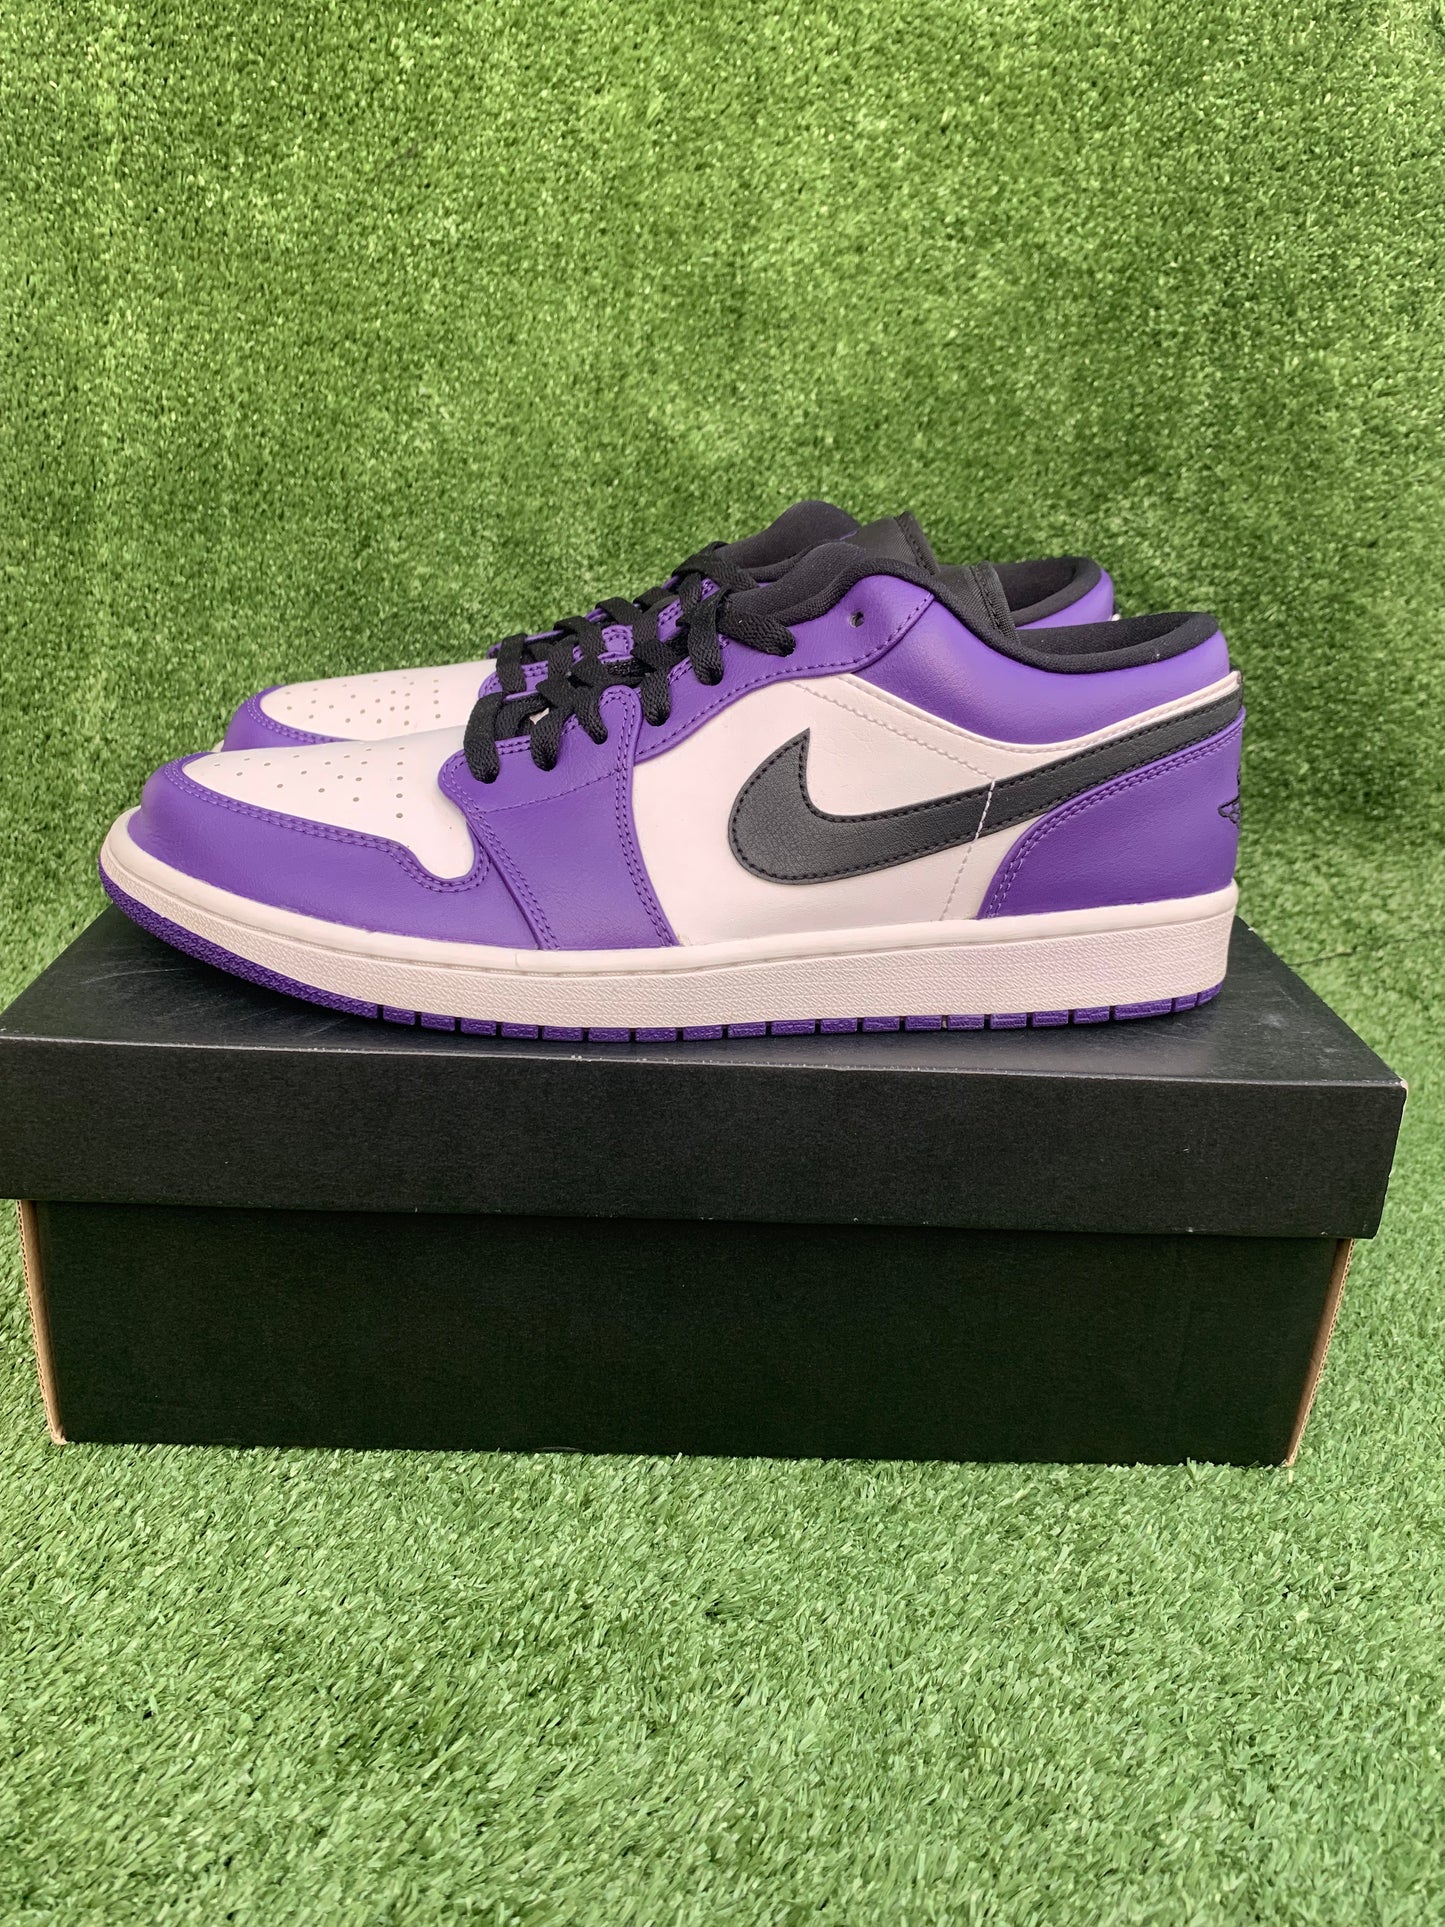 Jordan 1 Low - Court Purple [USED]